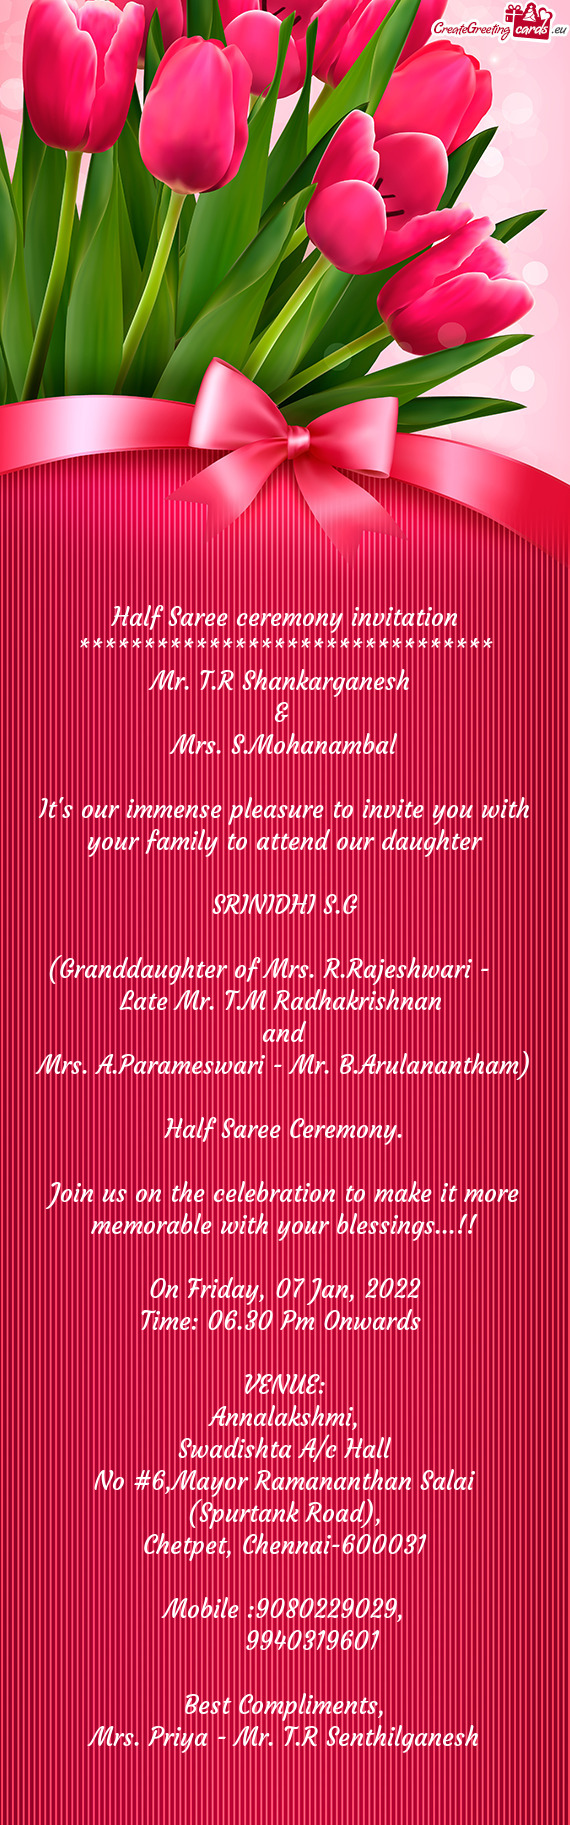 (Granddaughter of Mrs. R.Rajeshwari -  Late Mr. T.M Radhakrishnan